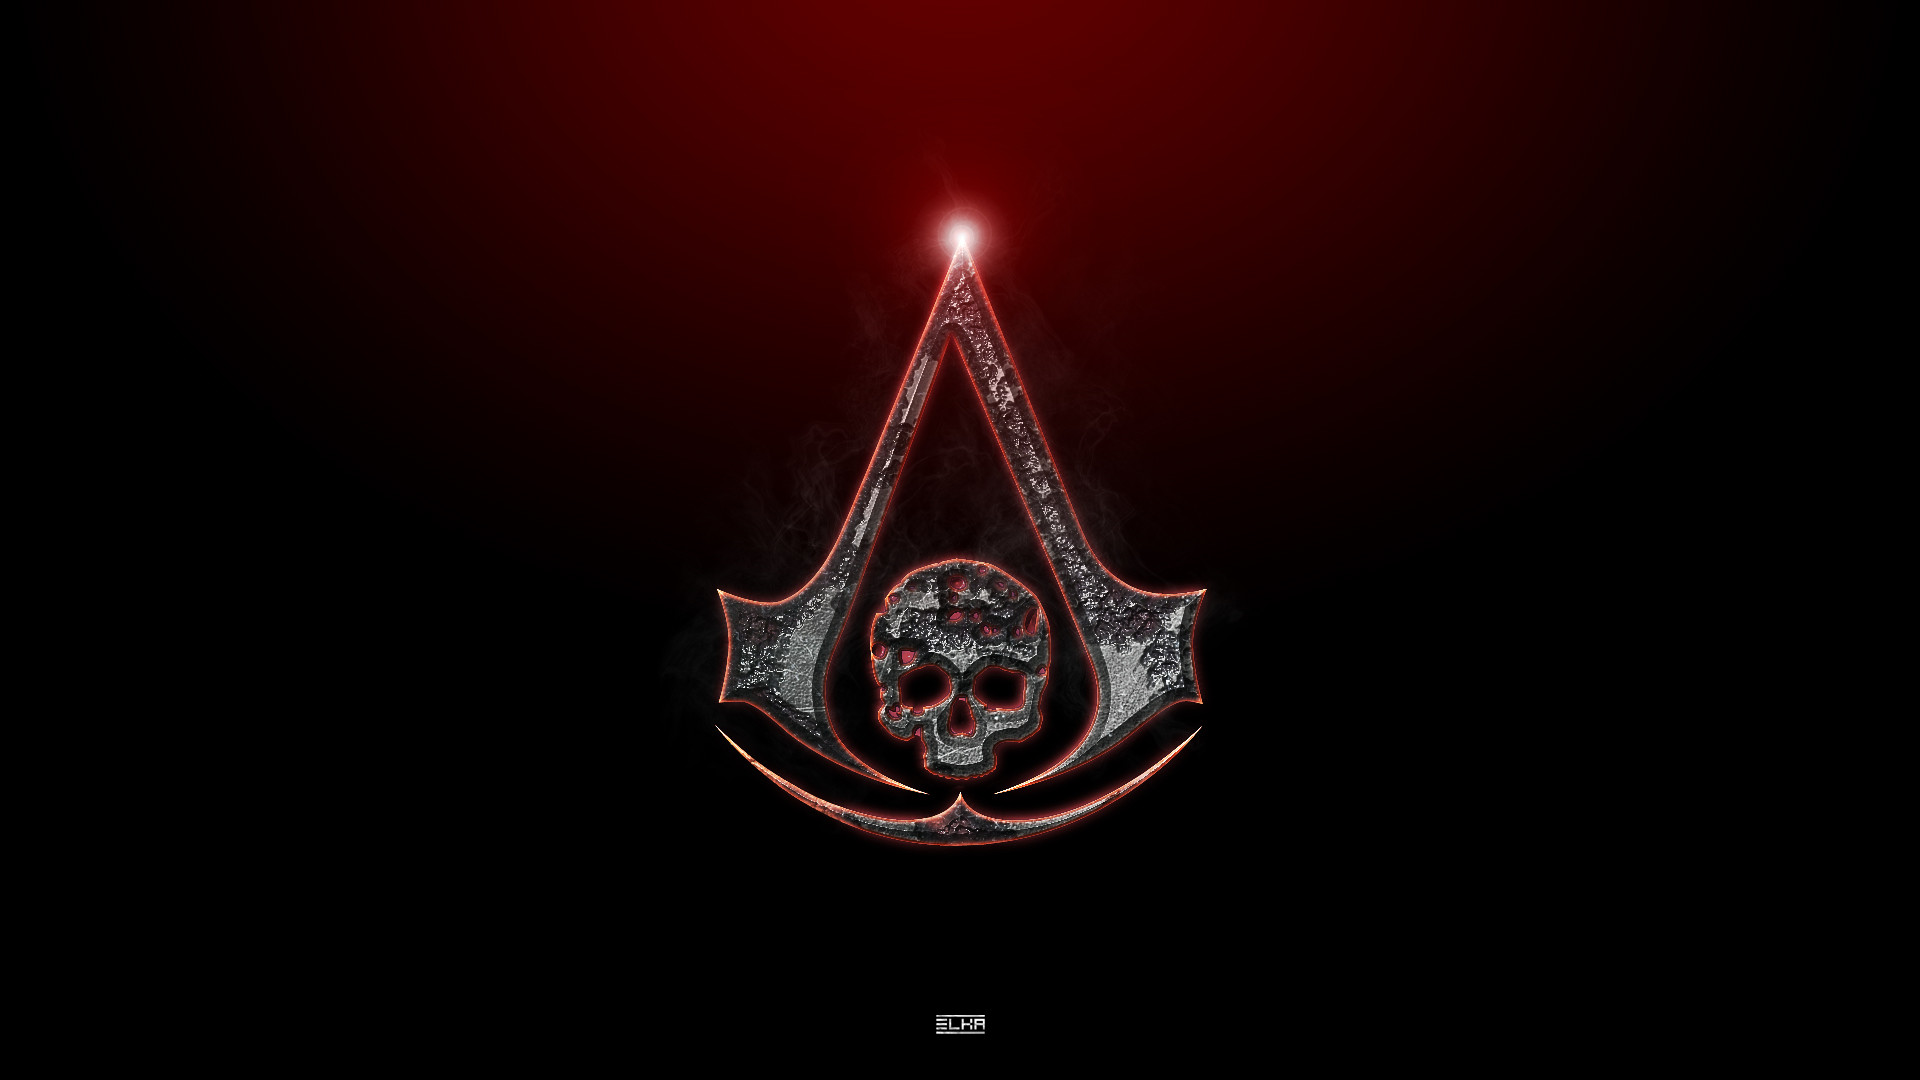 Assassins Creed Brotherhood Wallpapers Group | HD Wallpapers | Pinterest | Assassins  creed and Wallpaper